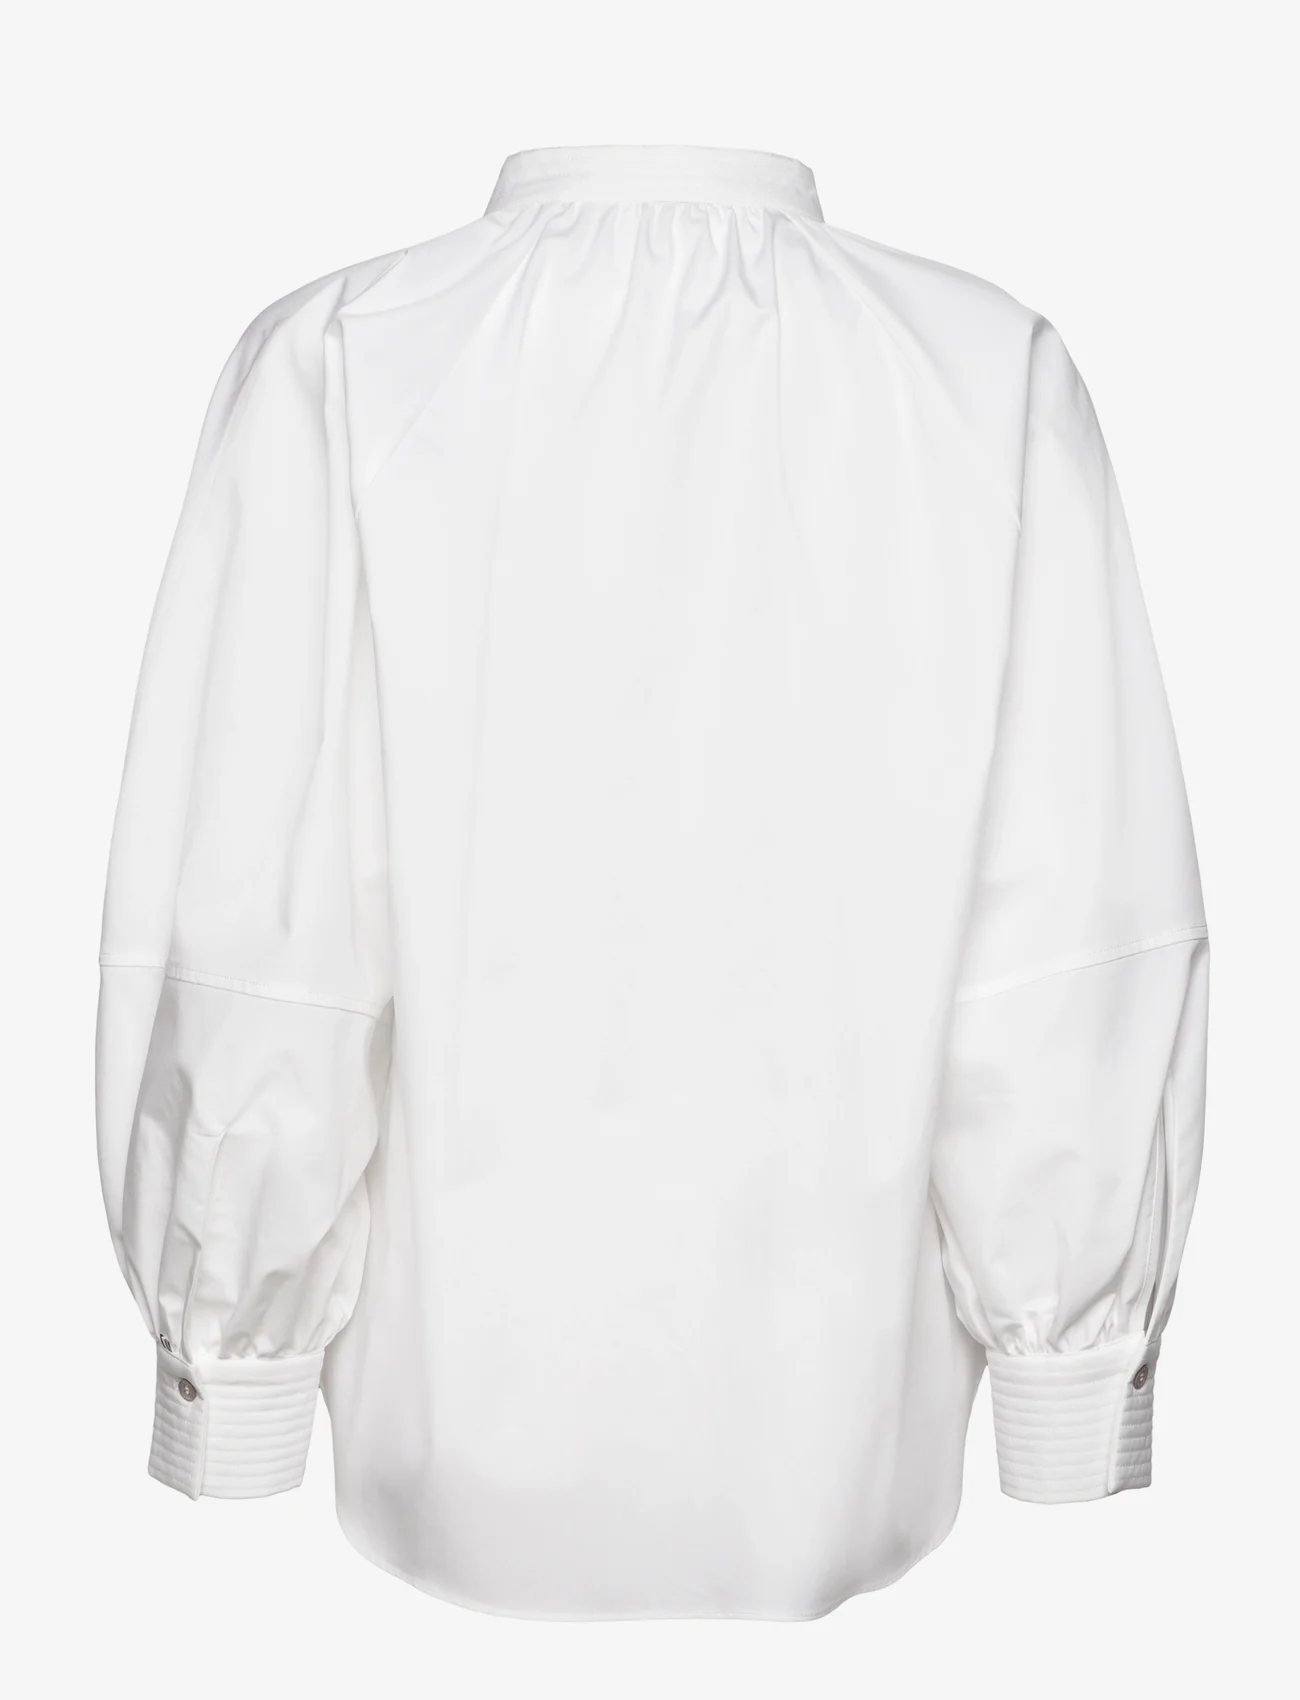 BOSS - Bipete - långärmade skjortor - white - 1